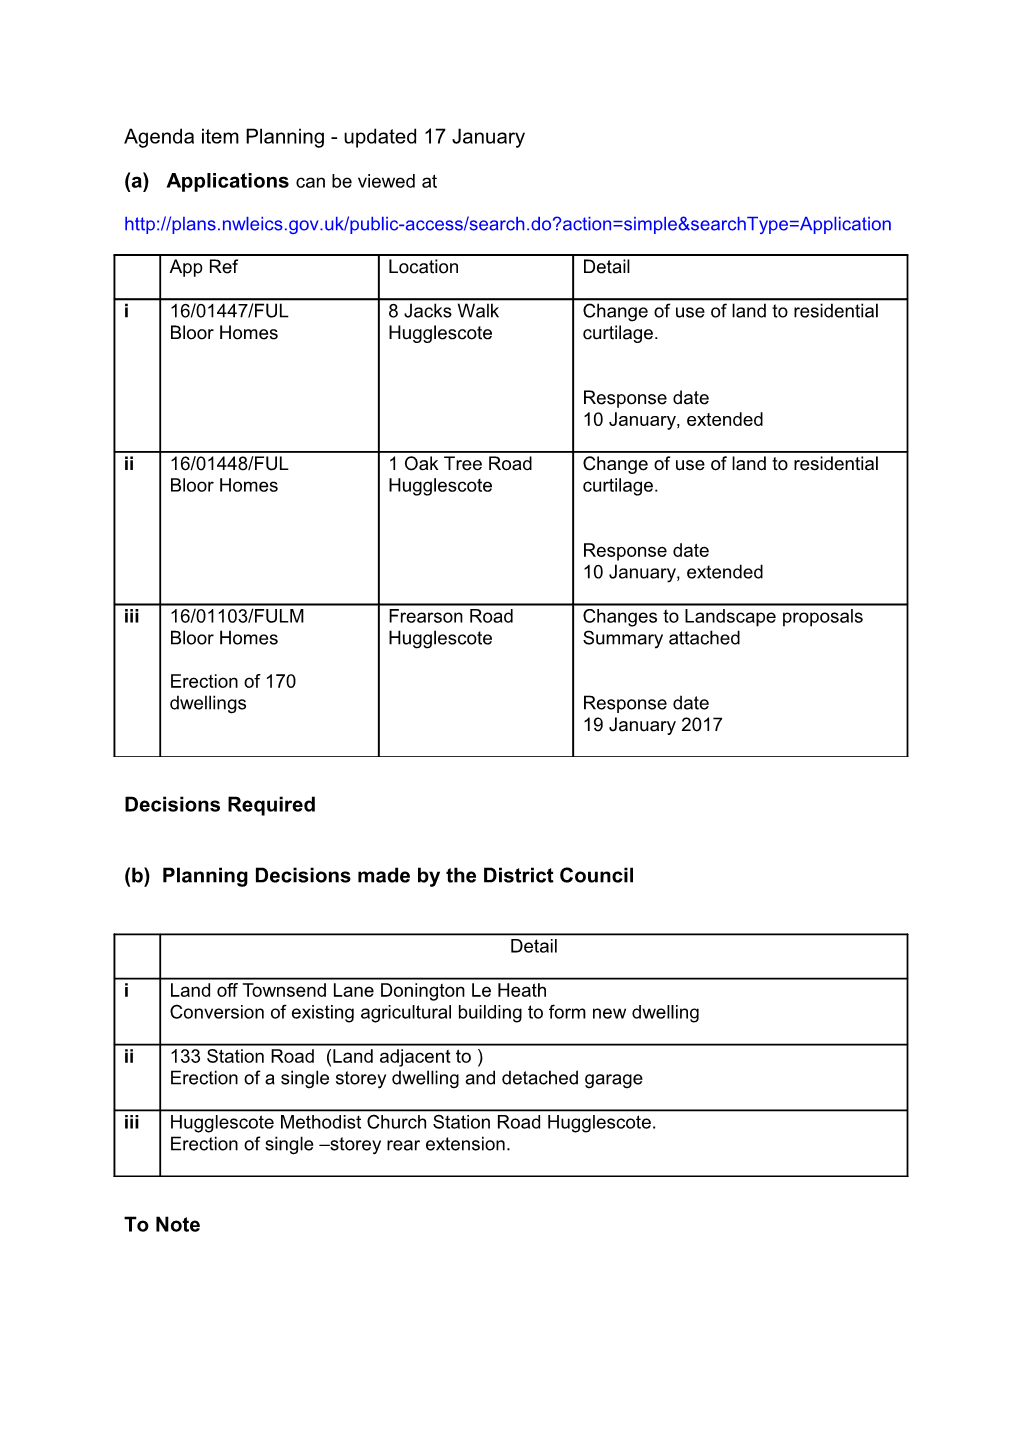 Agenda Item Planning- Updated 17 January